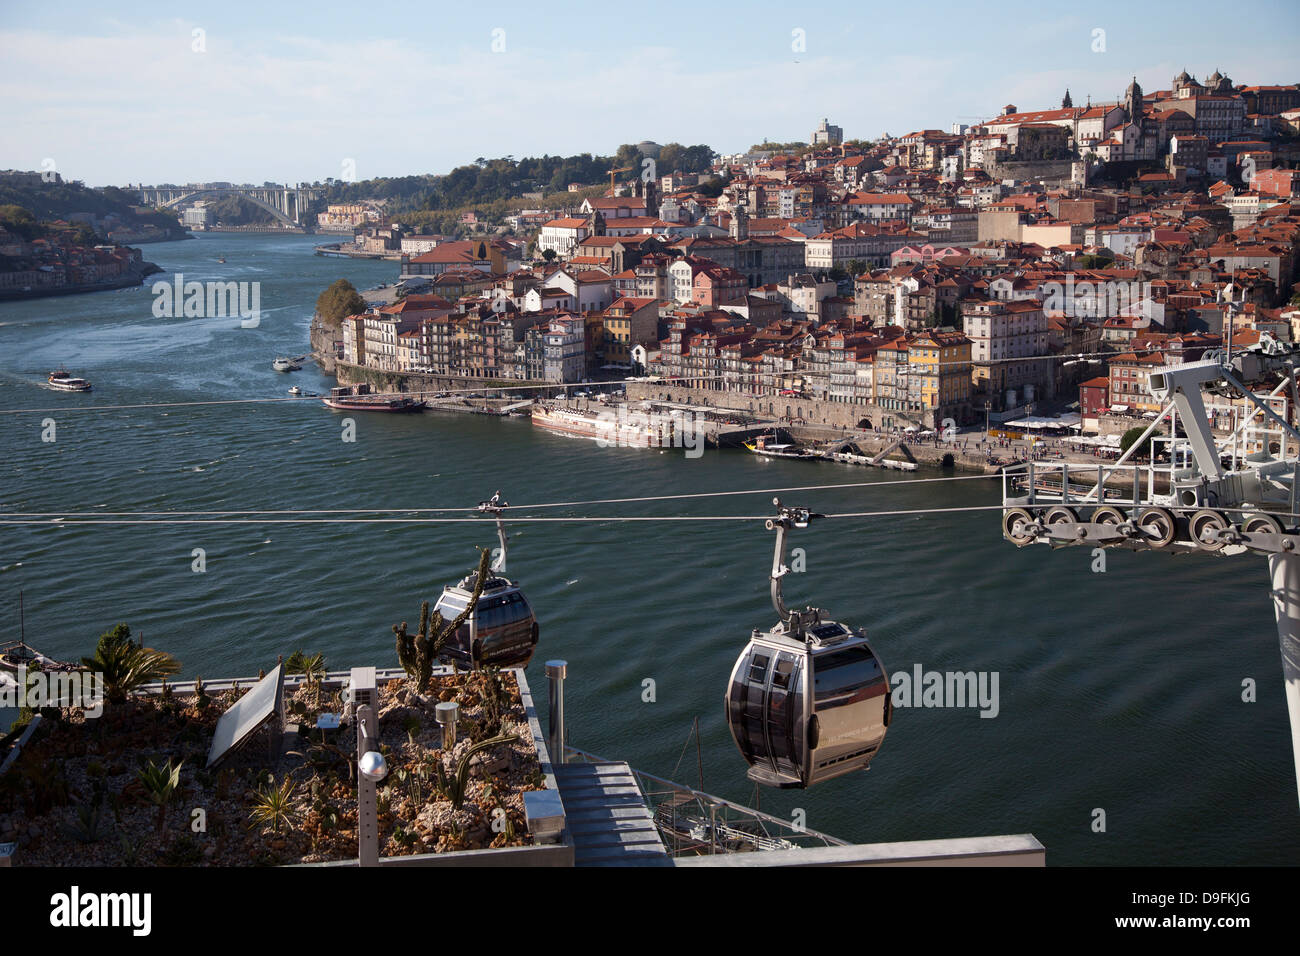 River Douro and old town of Ribeira, Porto, Portugal Stock Photo